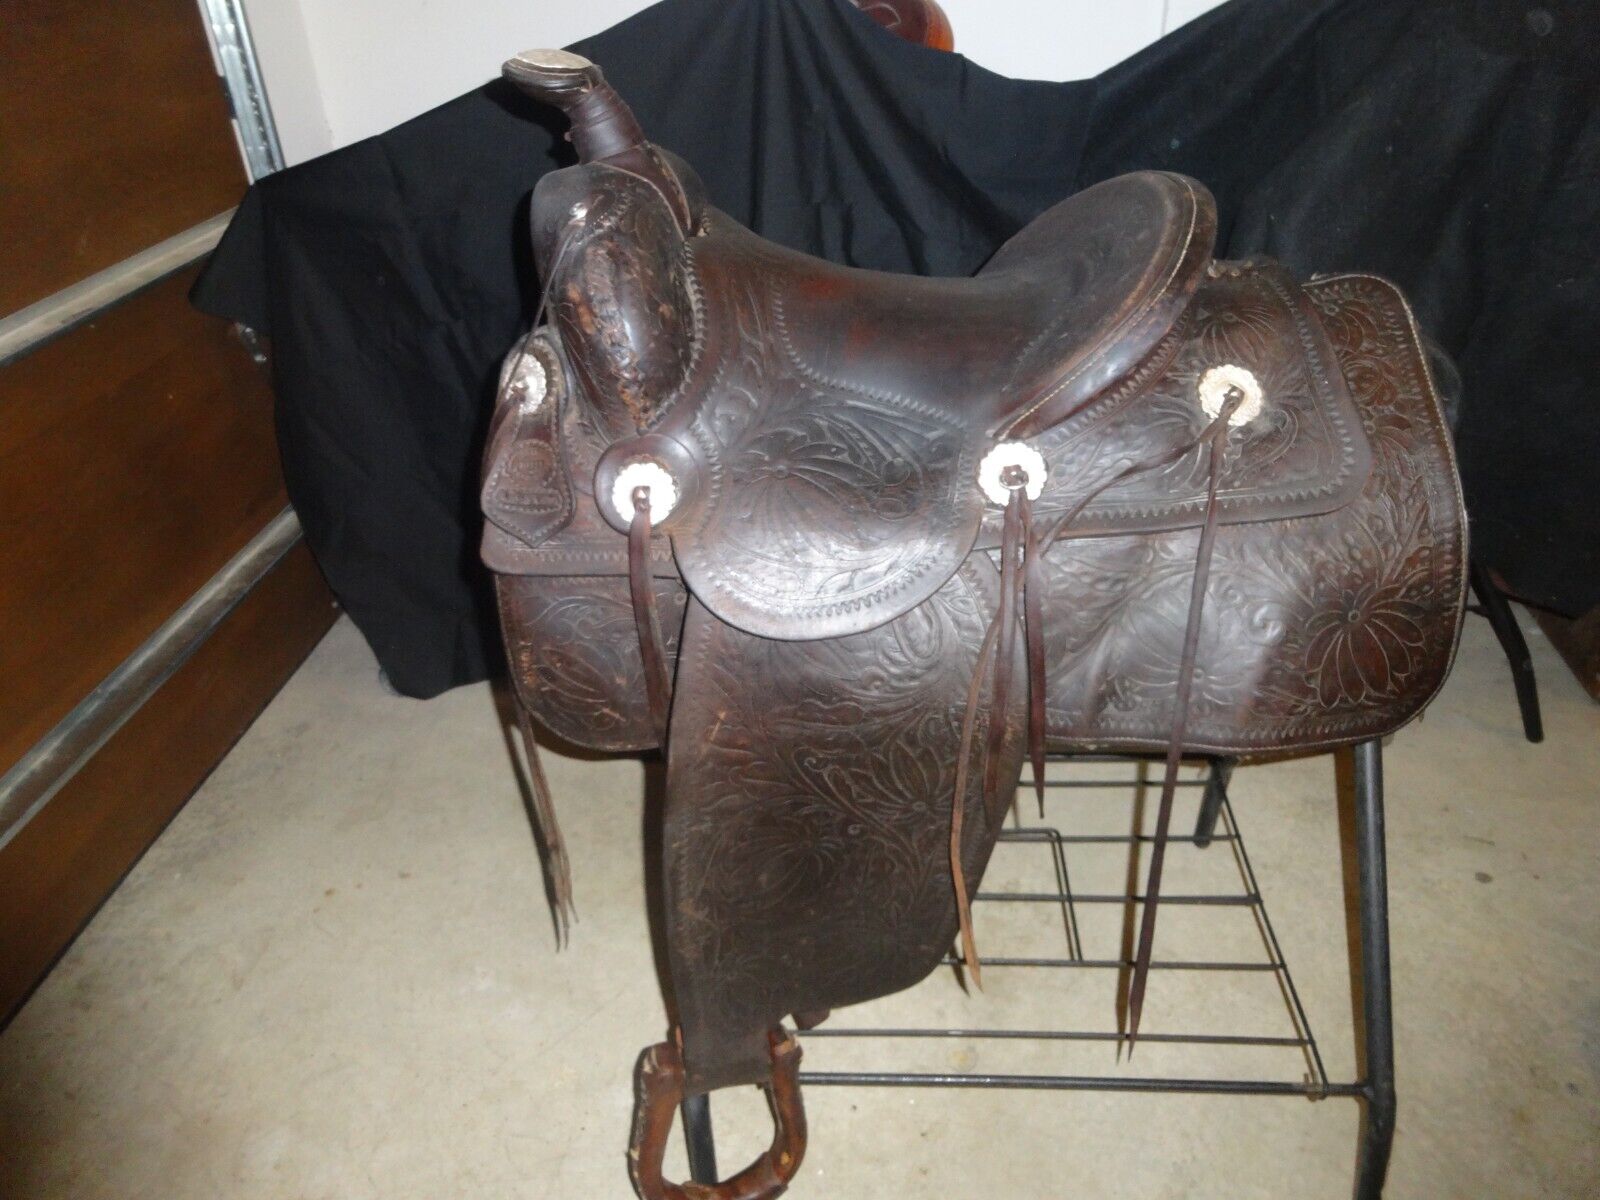 Historical Vintage Western Canandian Mounted Police Saddle